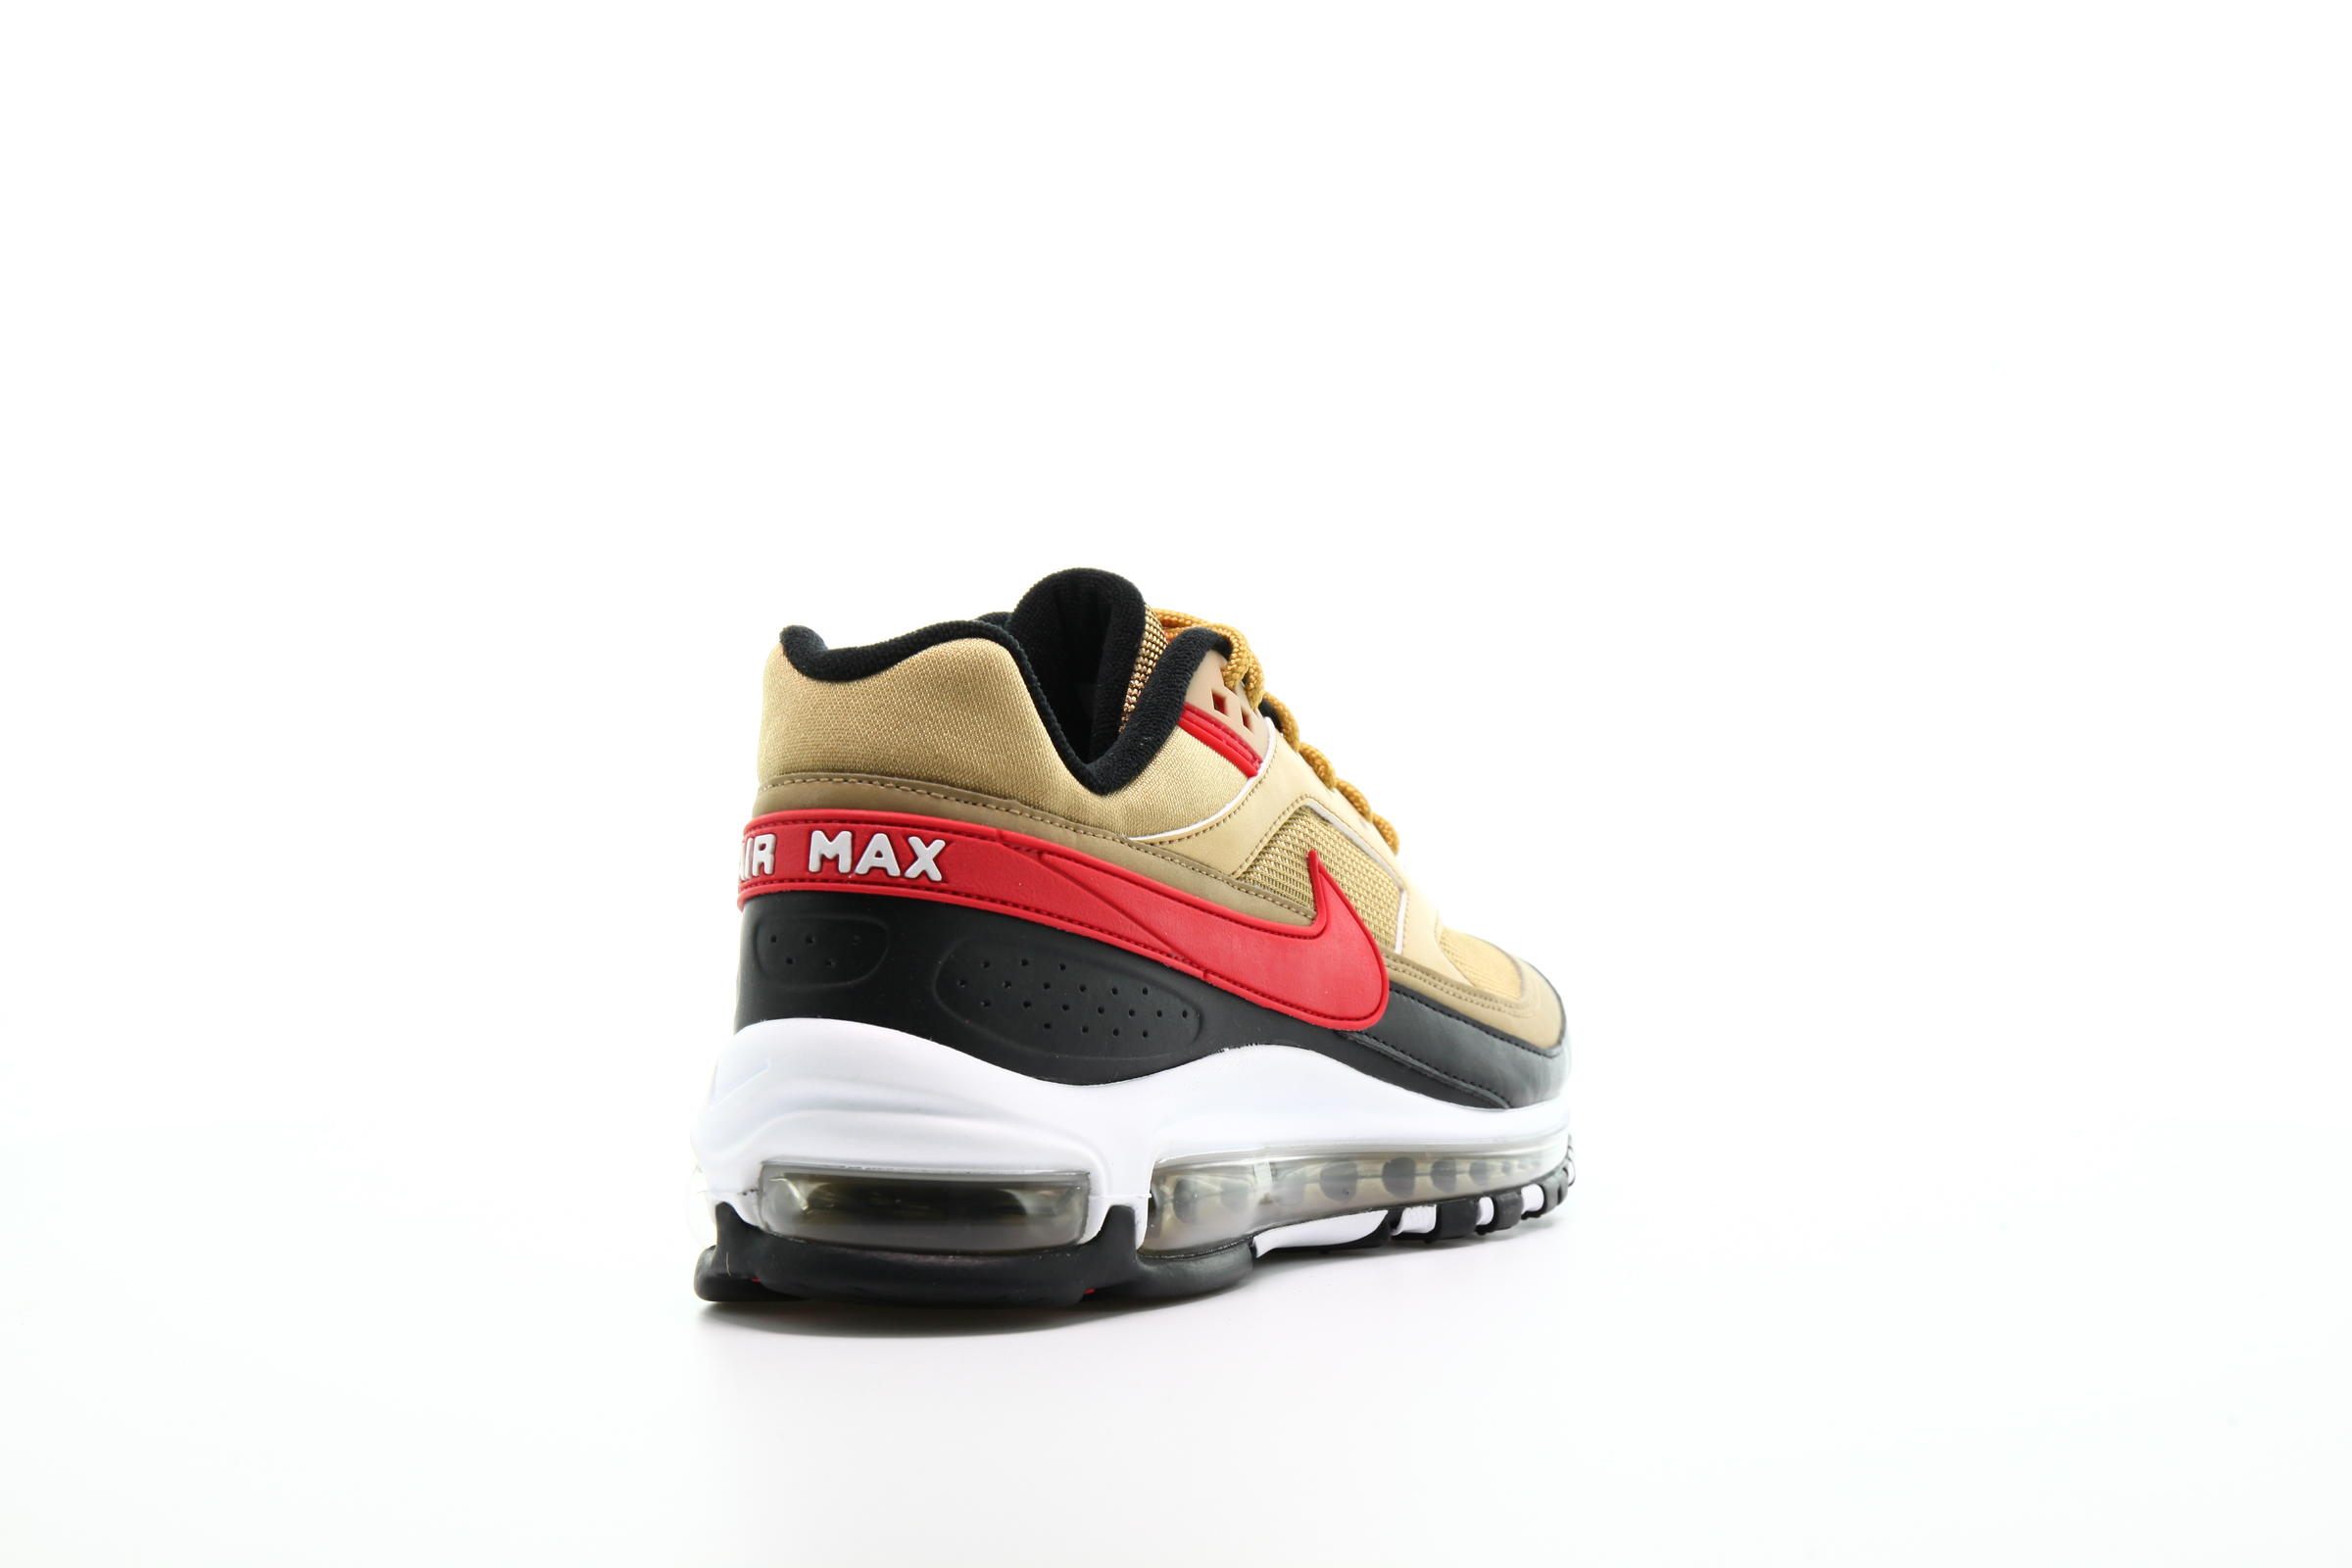 Nike Air Max 97/BW "Metallic Gold"